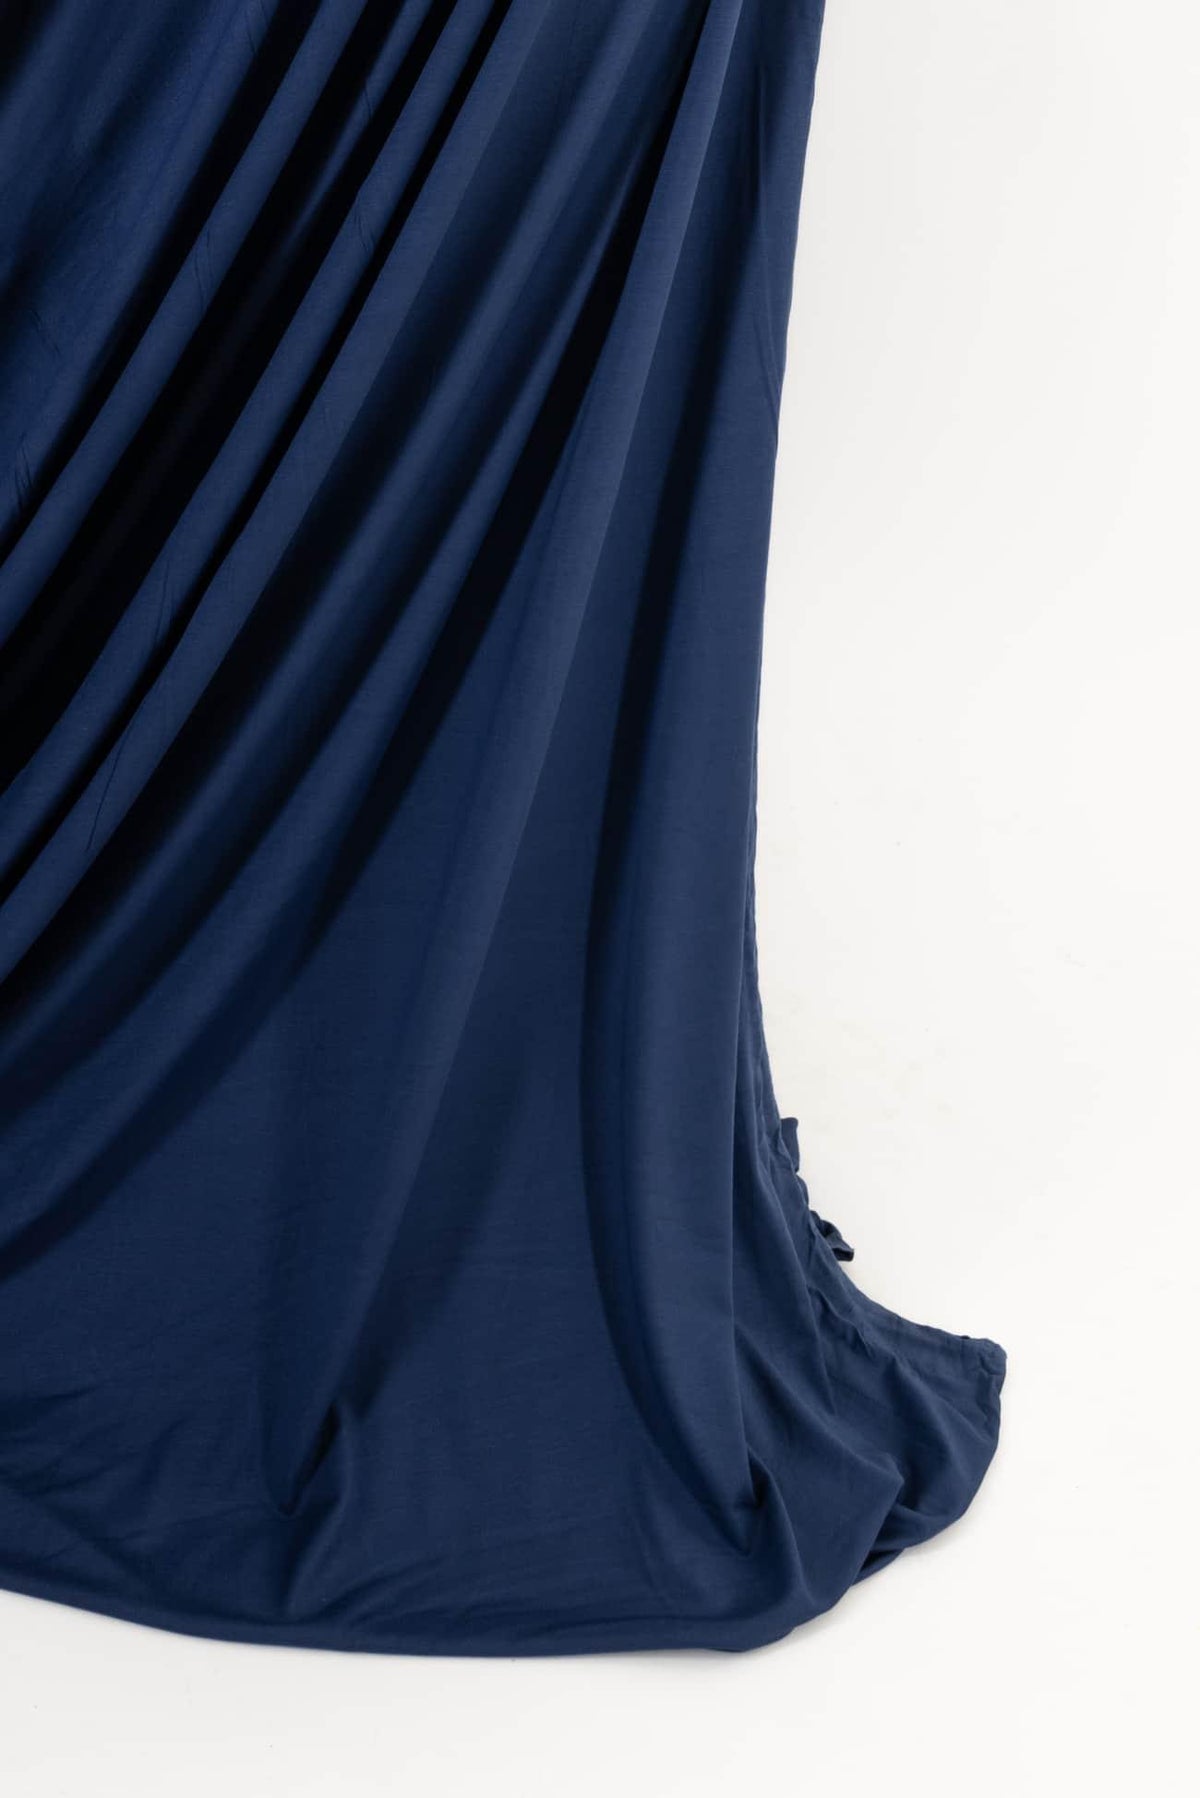 Bristol Blue USA Knit - Marcy Tilton Fabrics